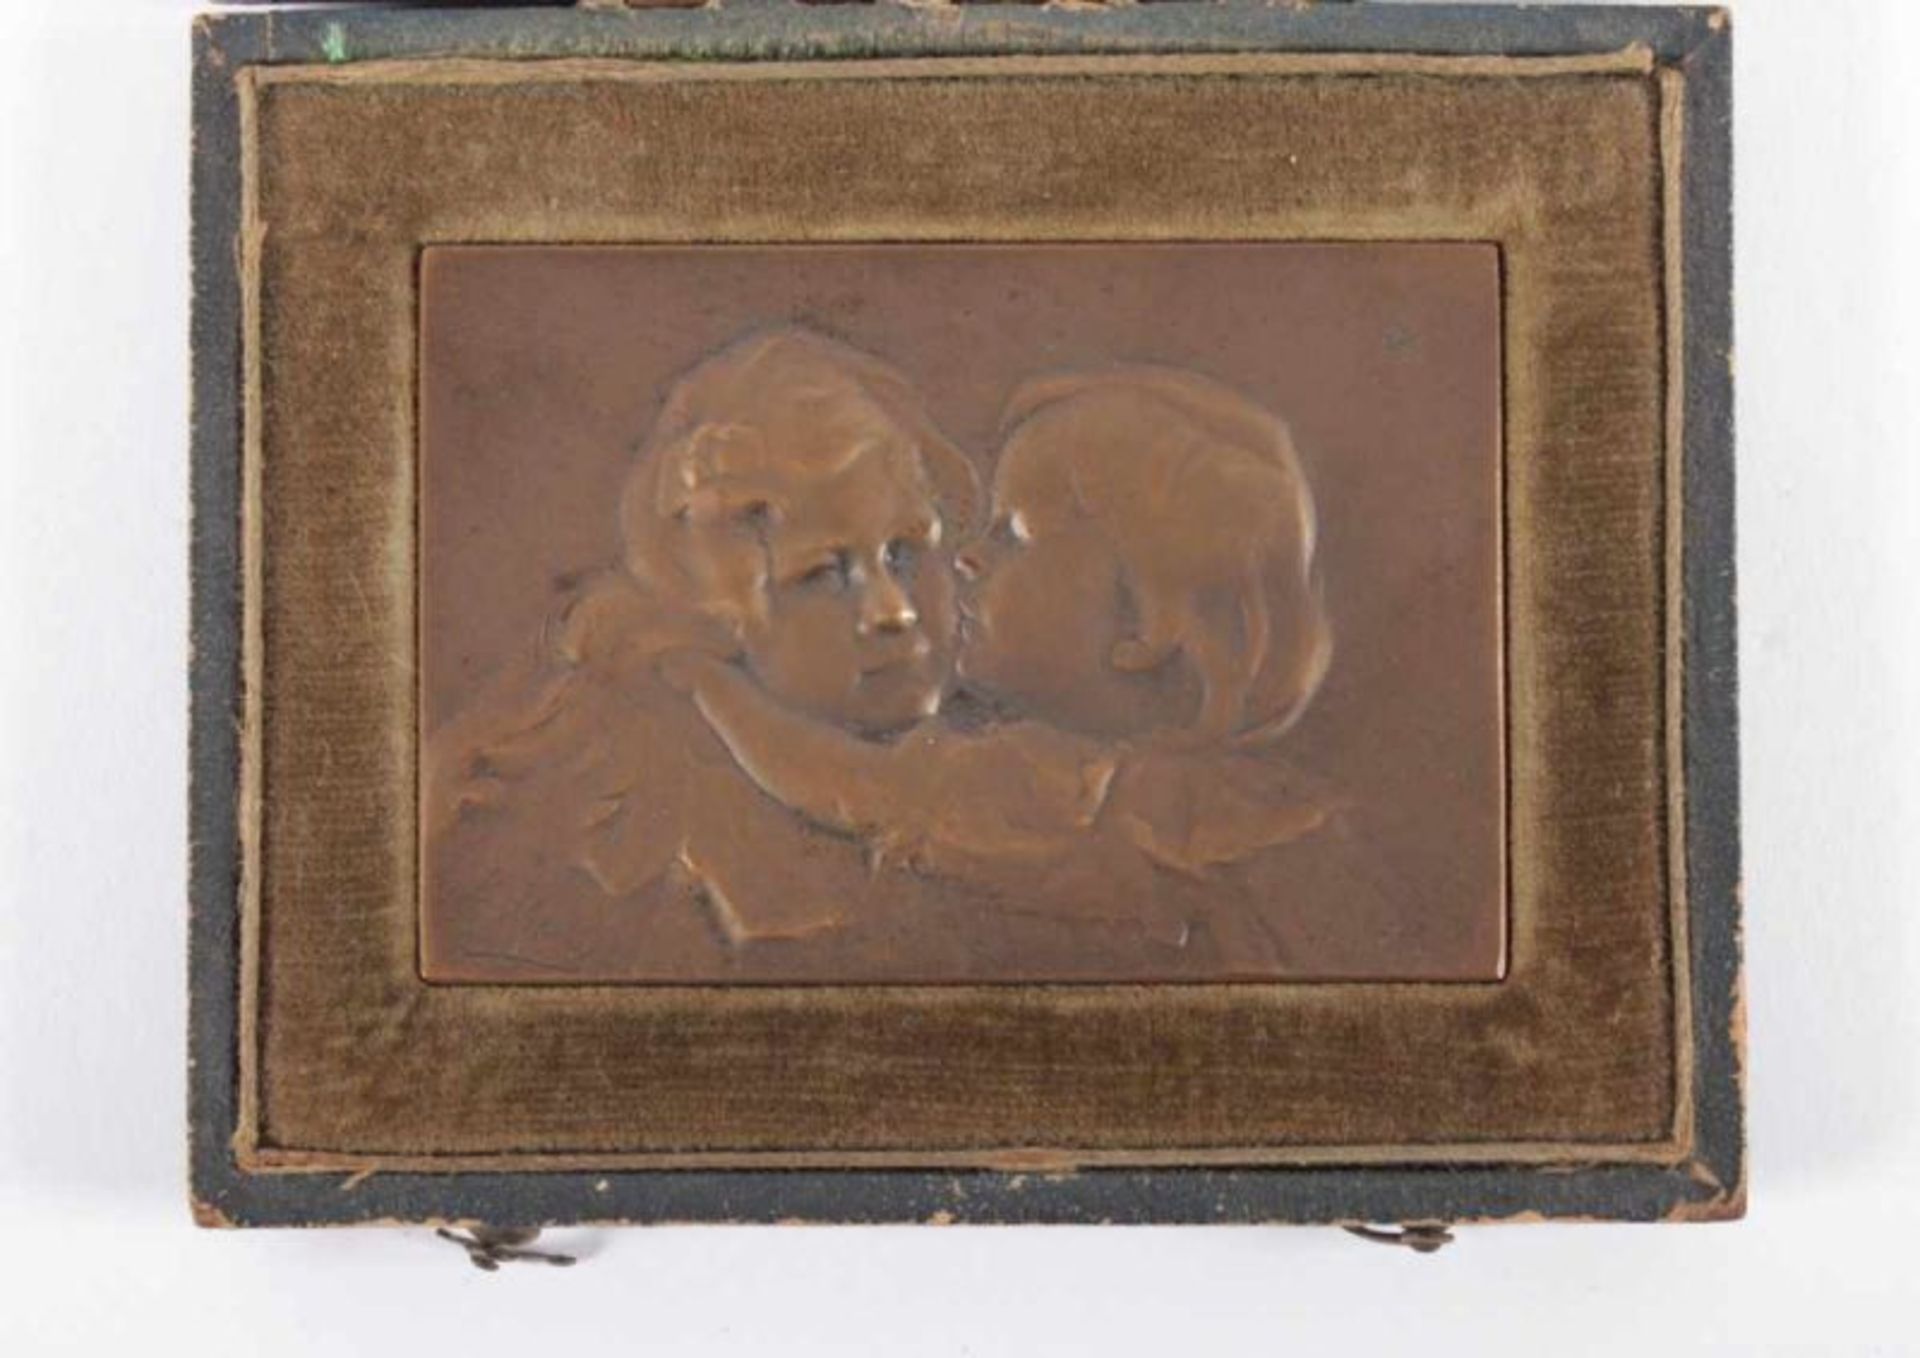 MORIG, B., Plakette zwei Kinder, Bronze, 4 x 7, in Etui 22.00 % buyer's premium on the hammer